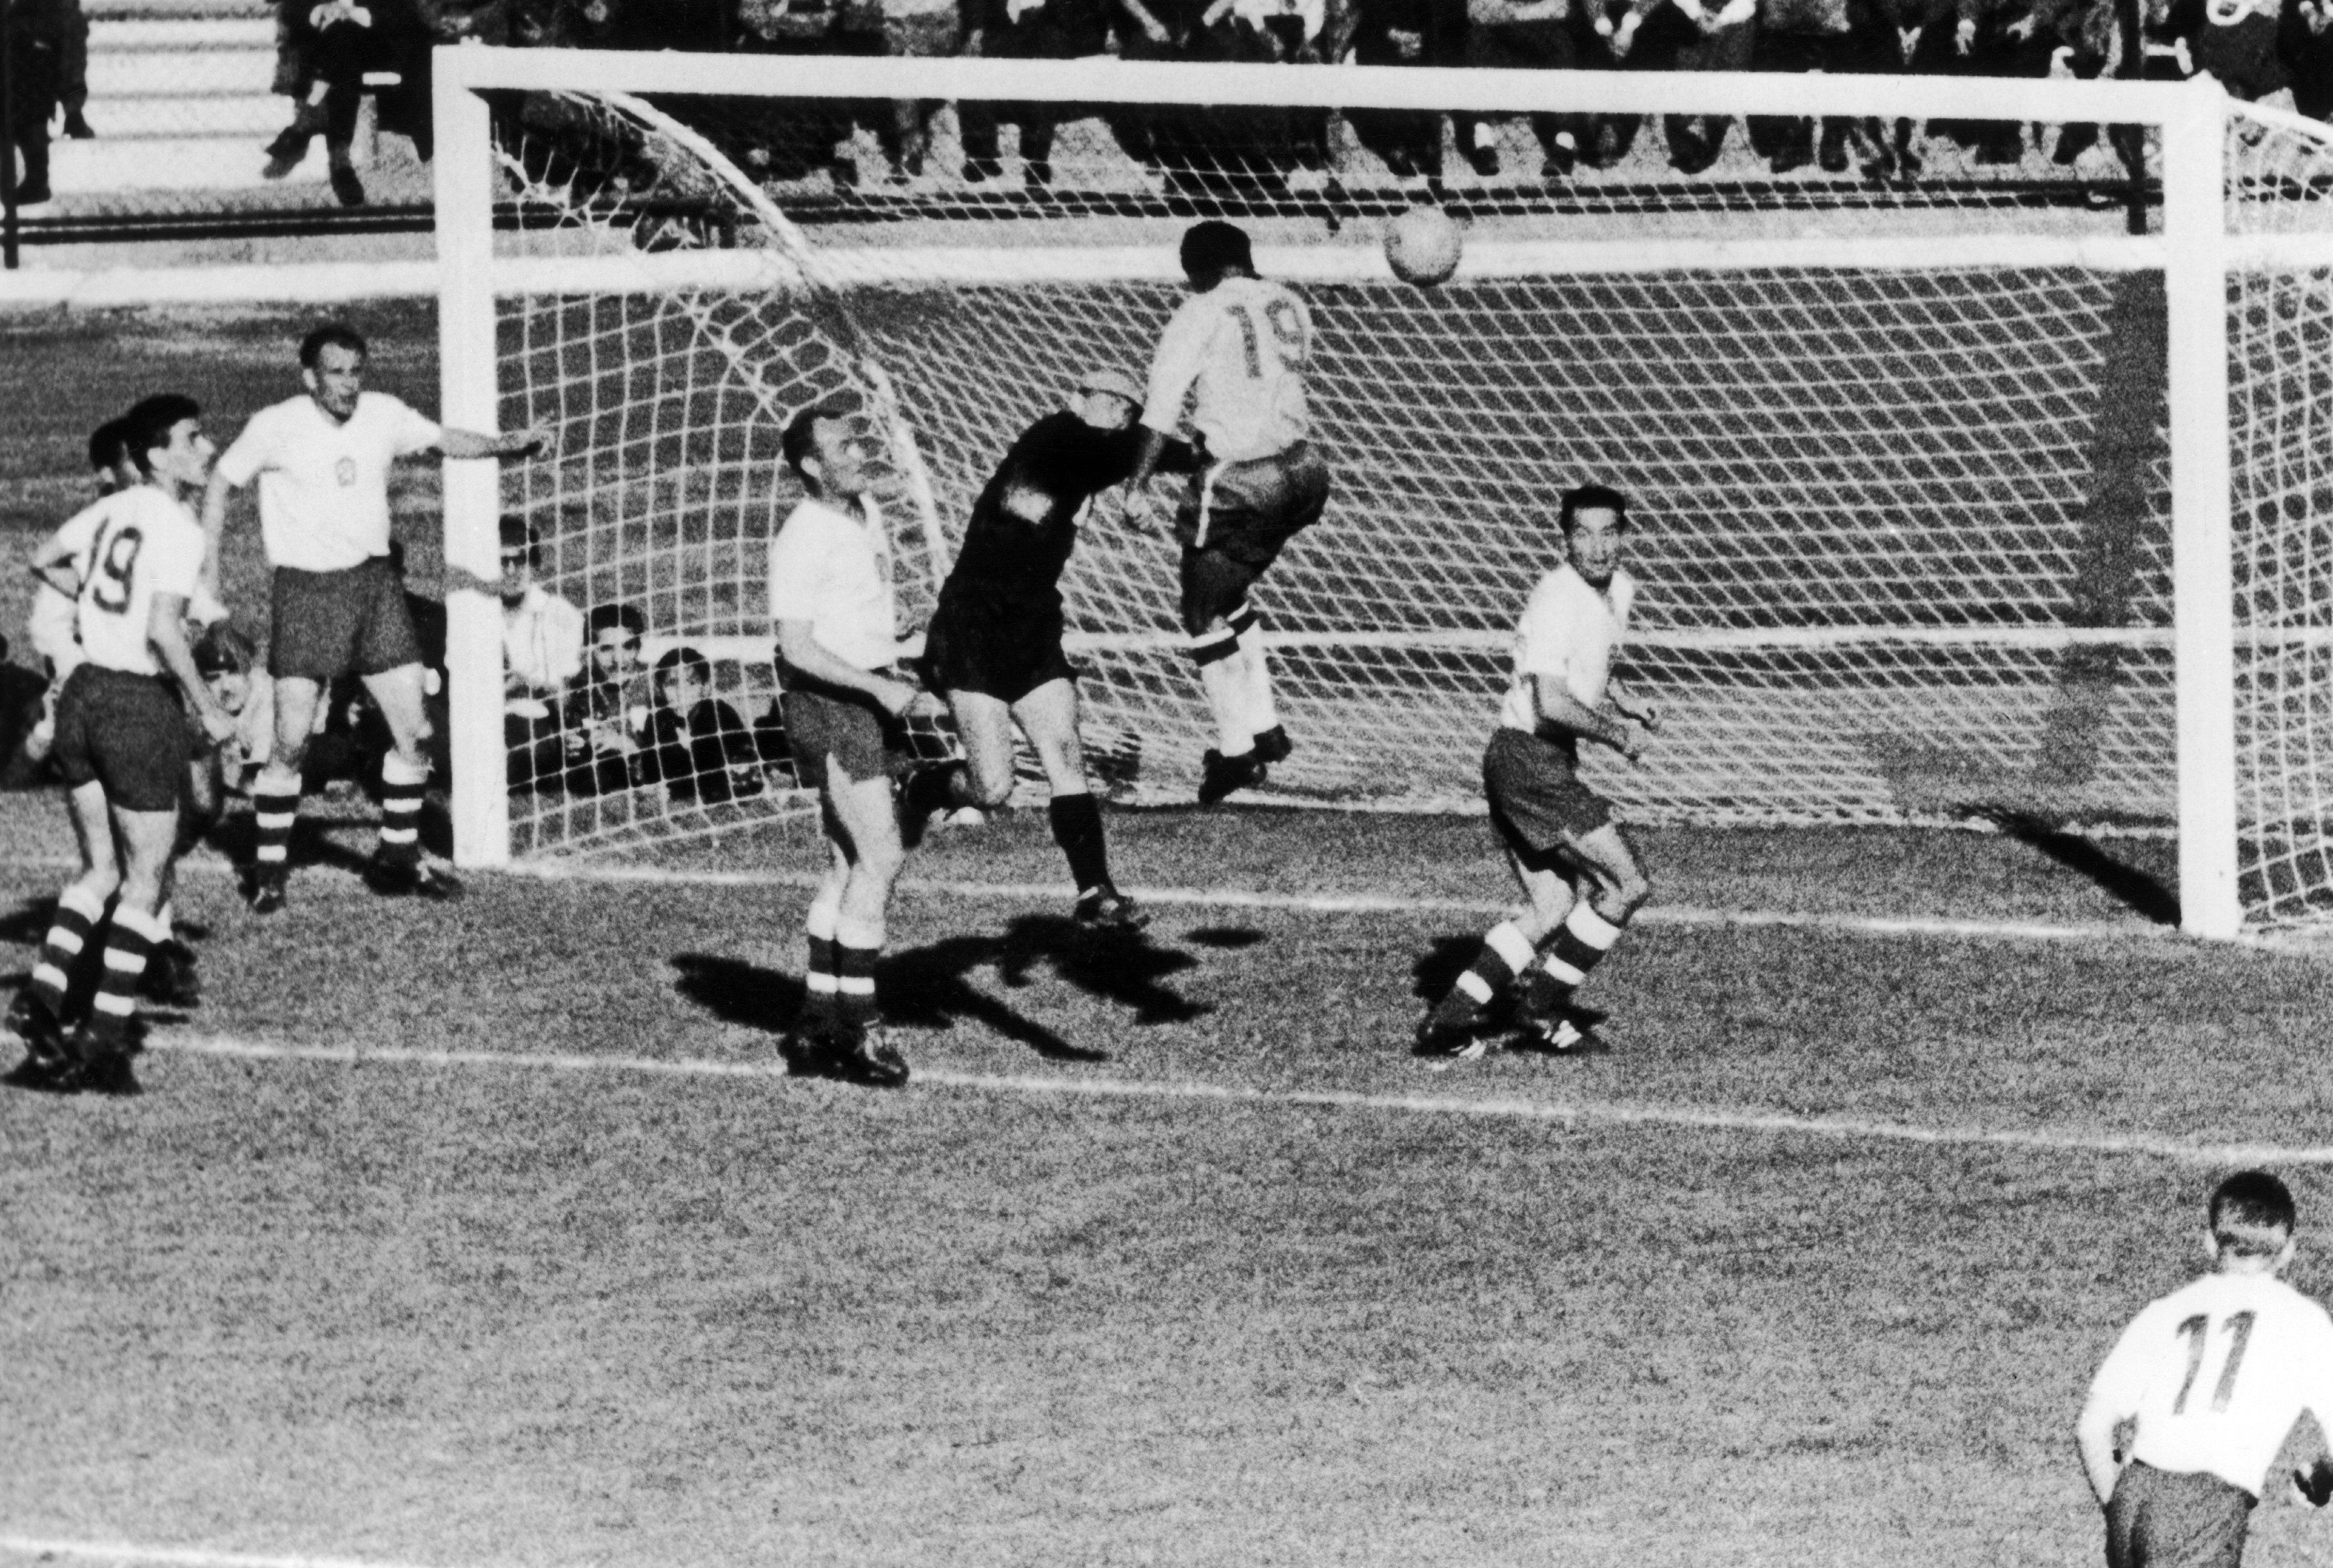 Brazil v Czechoslovakia in the 1962 World Cup final